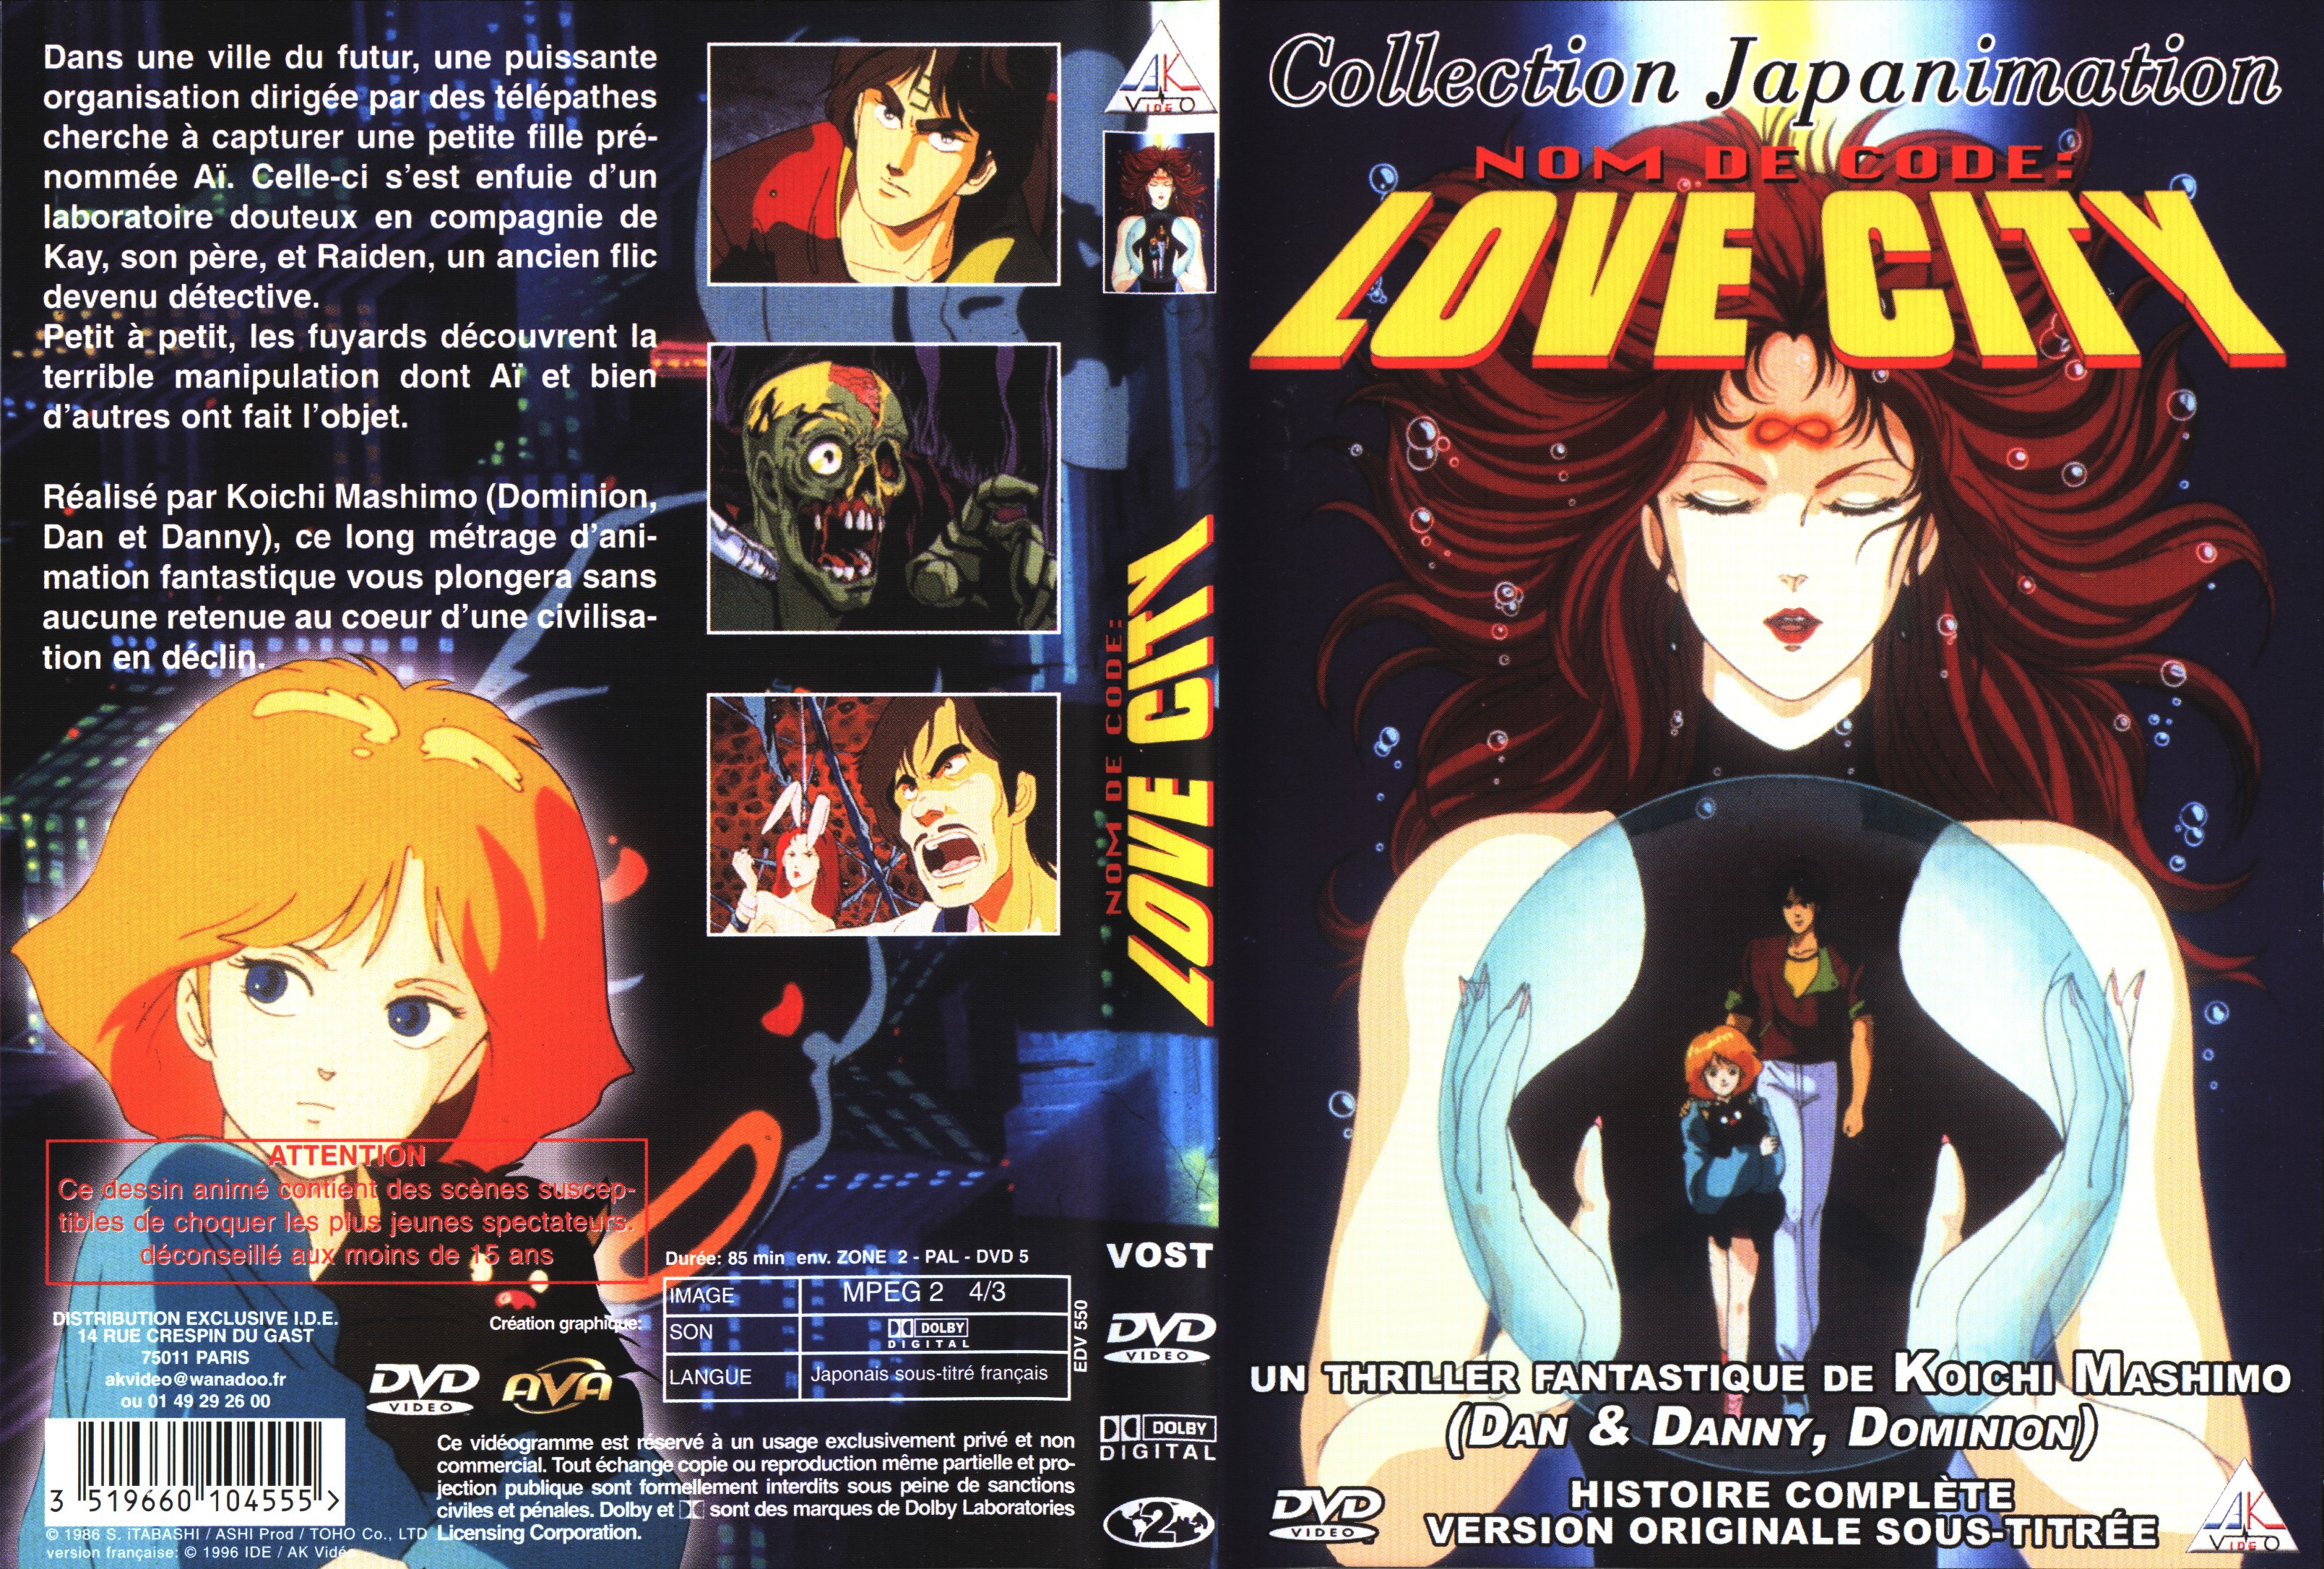 Jaquette DVD Nom de code love city